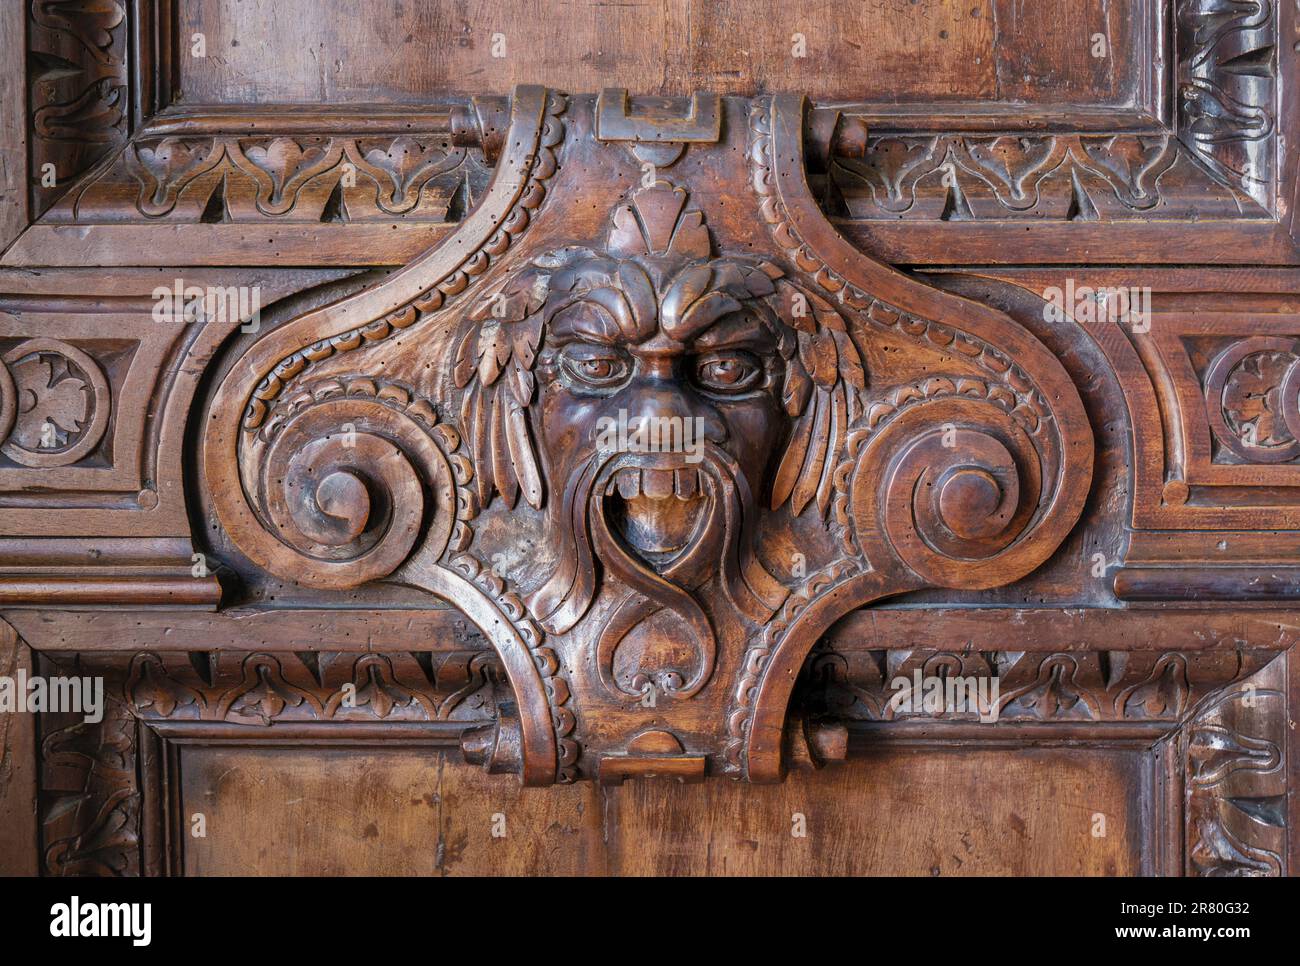 Groteske Fassade aus Holz im Palazzo Ducale oder Dogenpalast in Venedig, Italien. Venedig gehört zum UNESCO-Weltkulturerbe. Stockfoto